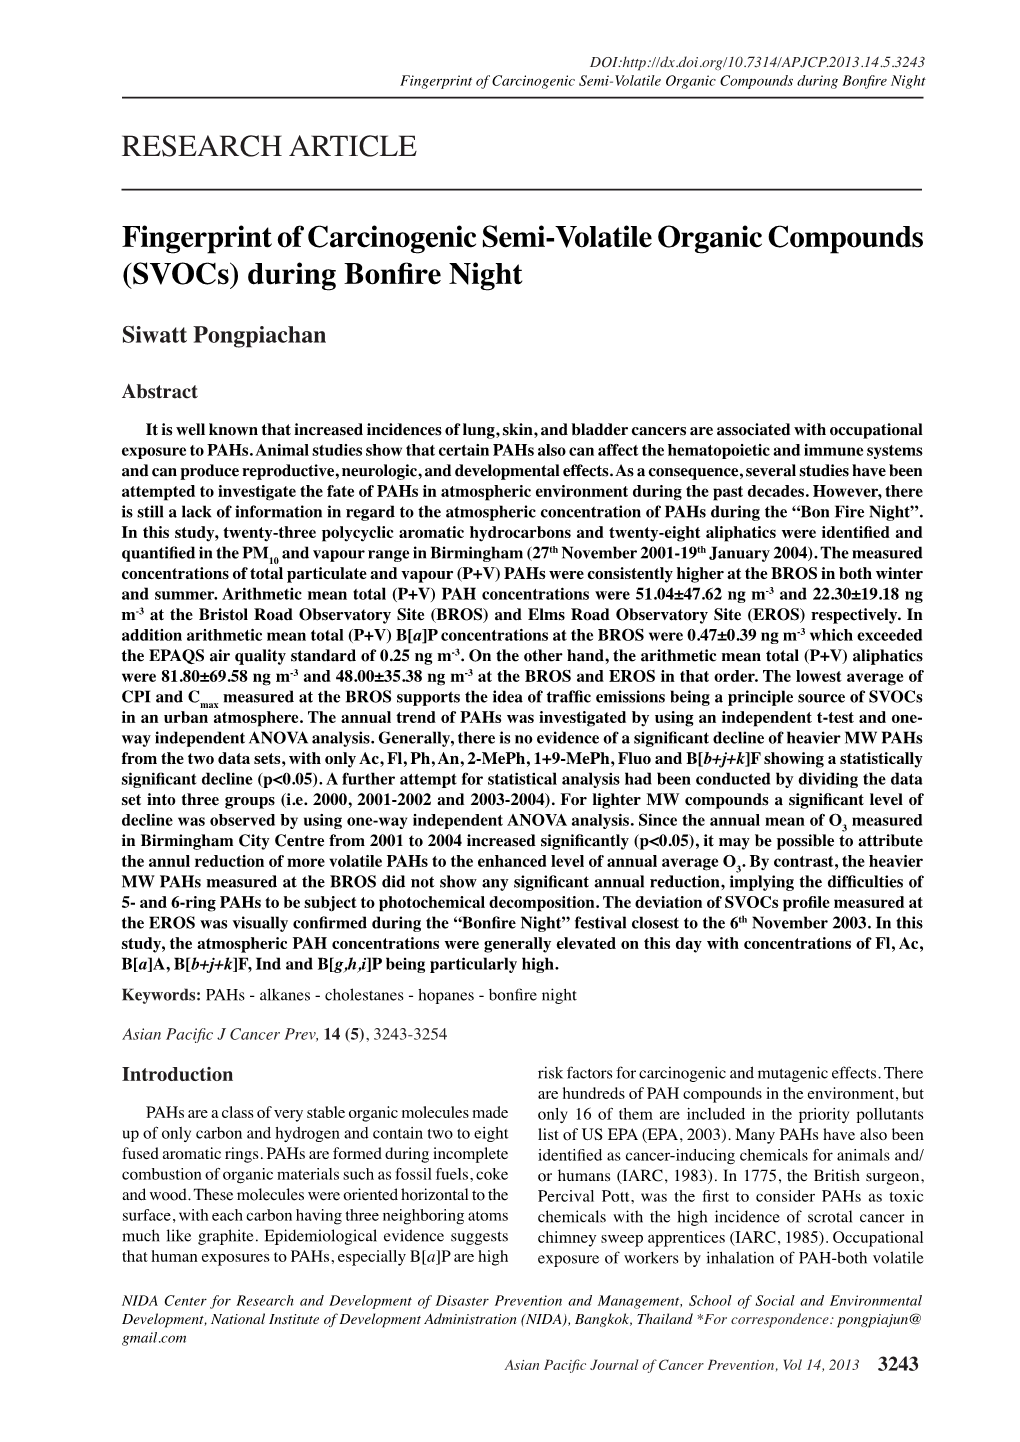 Fingerprint of Carcinogenic Semi-Volatile Organic Compounds During Bonfire Night